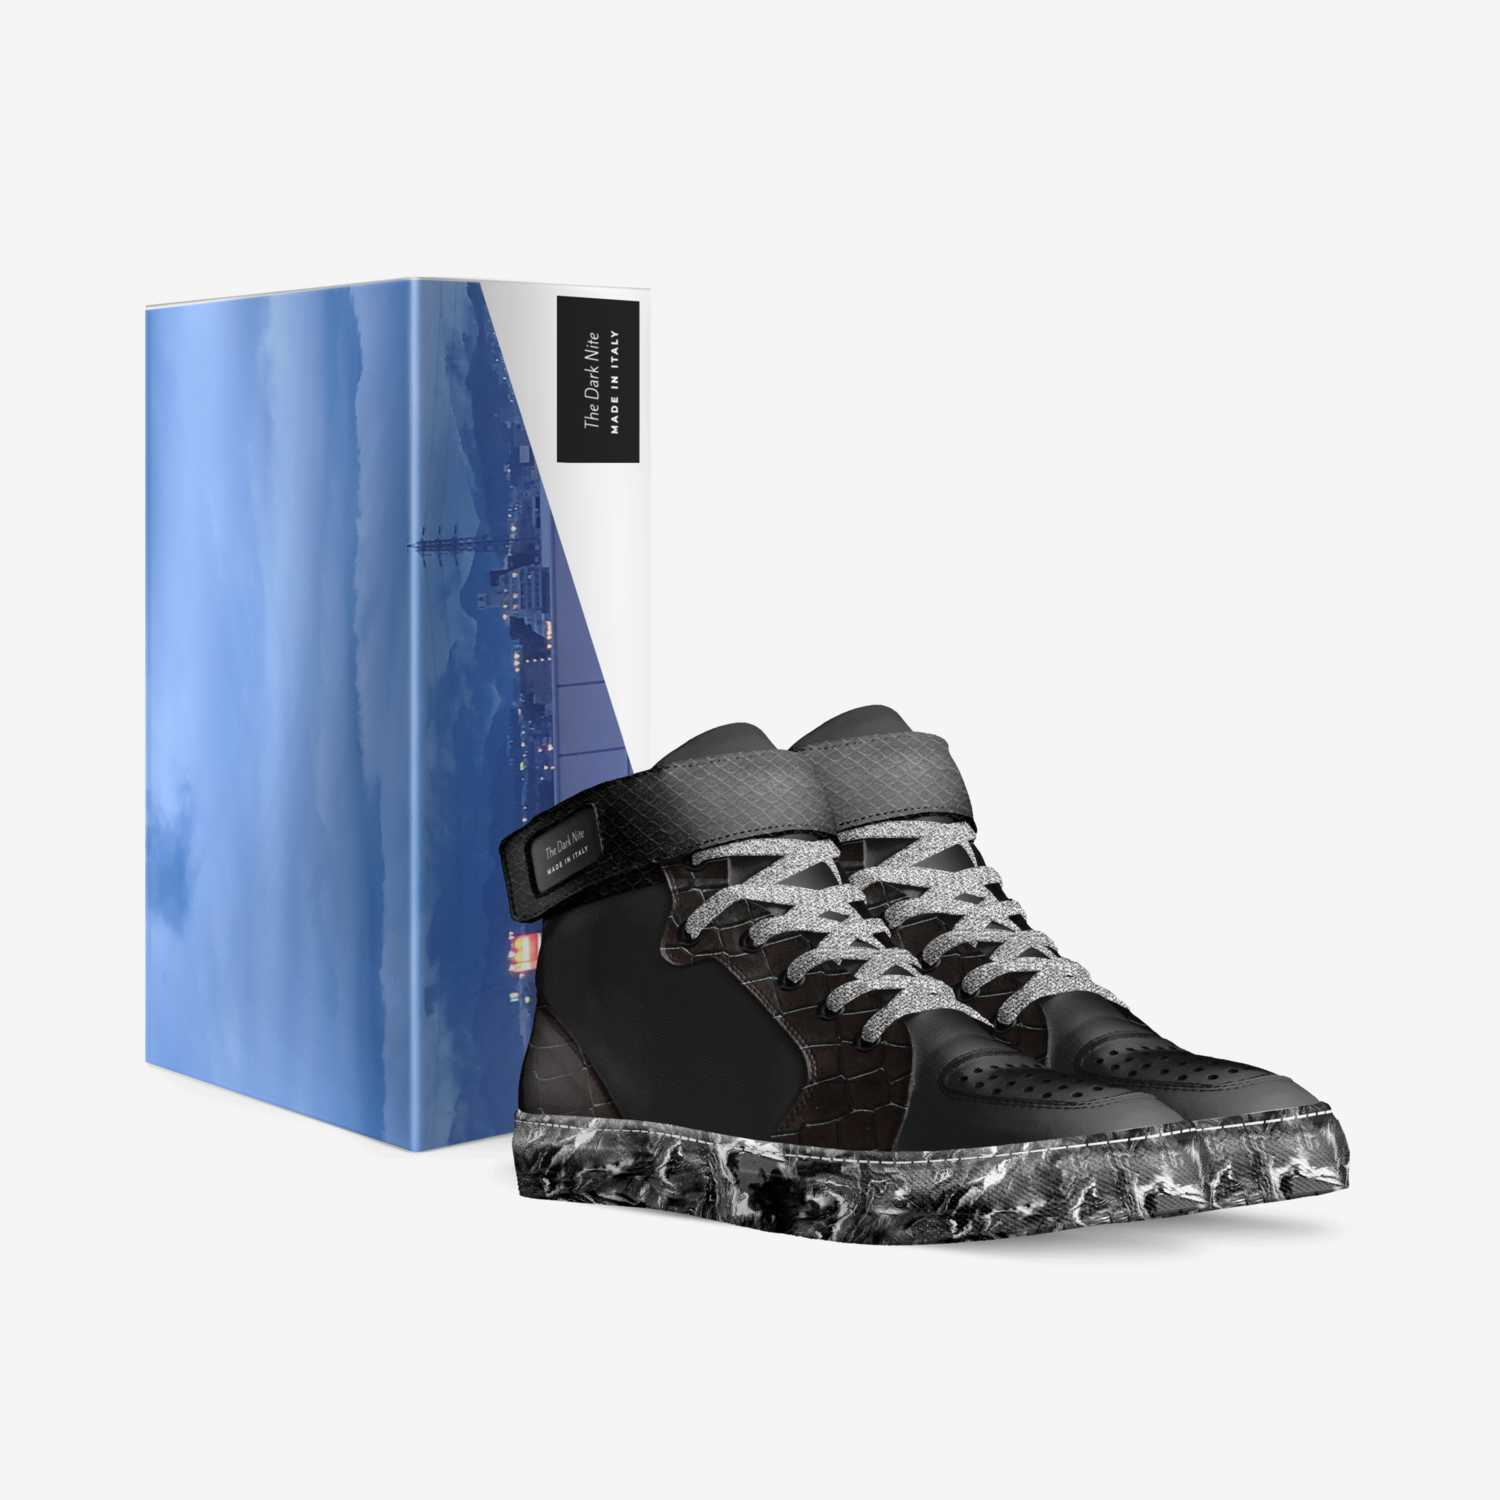 The Dark Nite custom made in Italy shoes by Tammera Hamilton | Box view